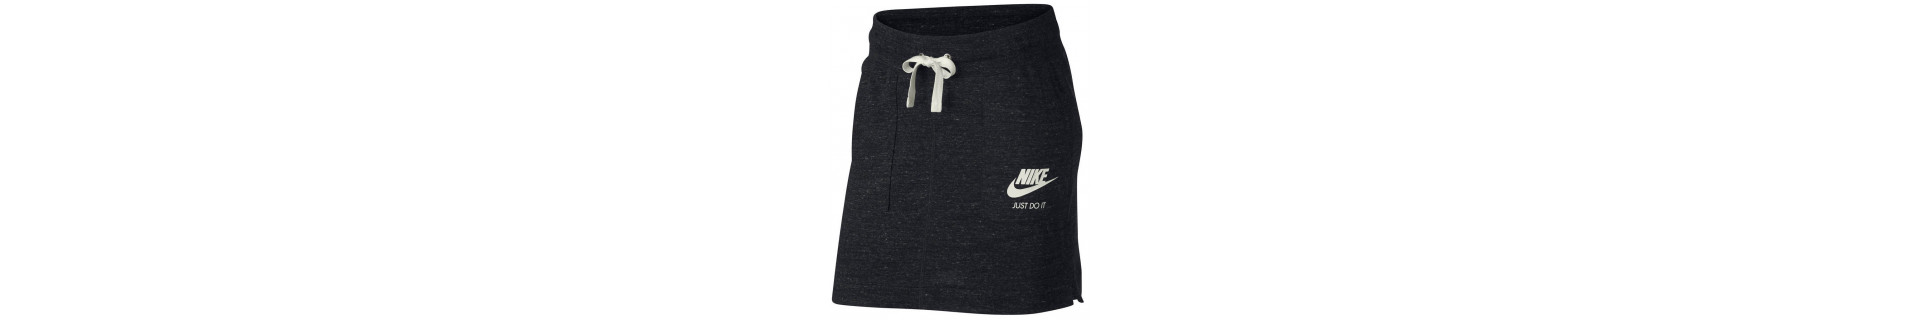 Bermuda and shorts for women Adidas, Altonadock, Nike, Reebok, Puma